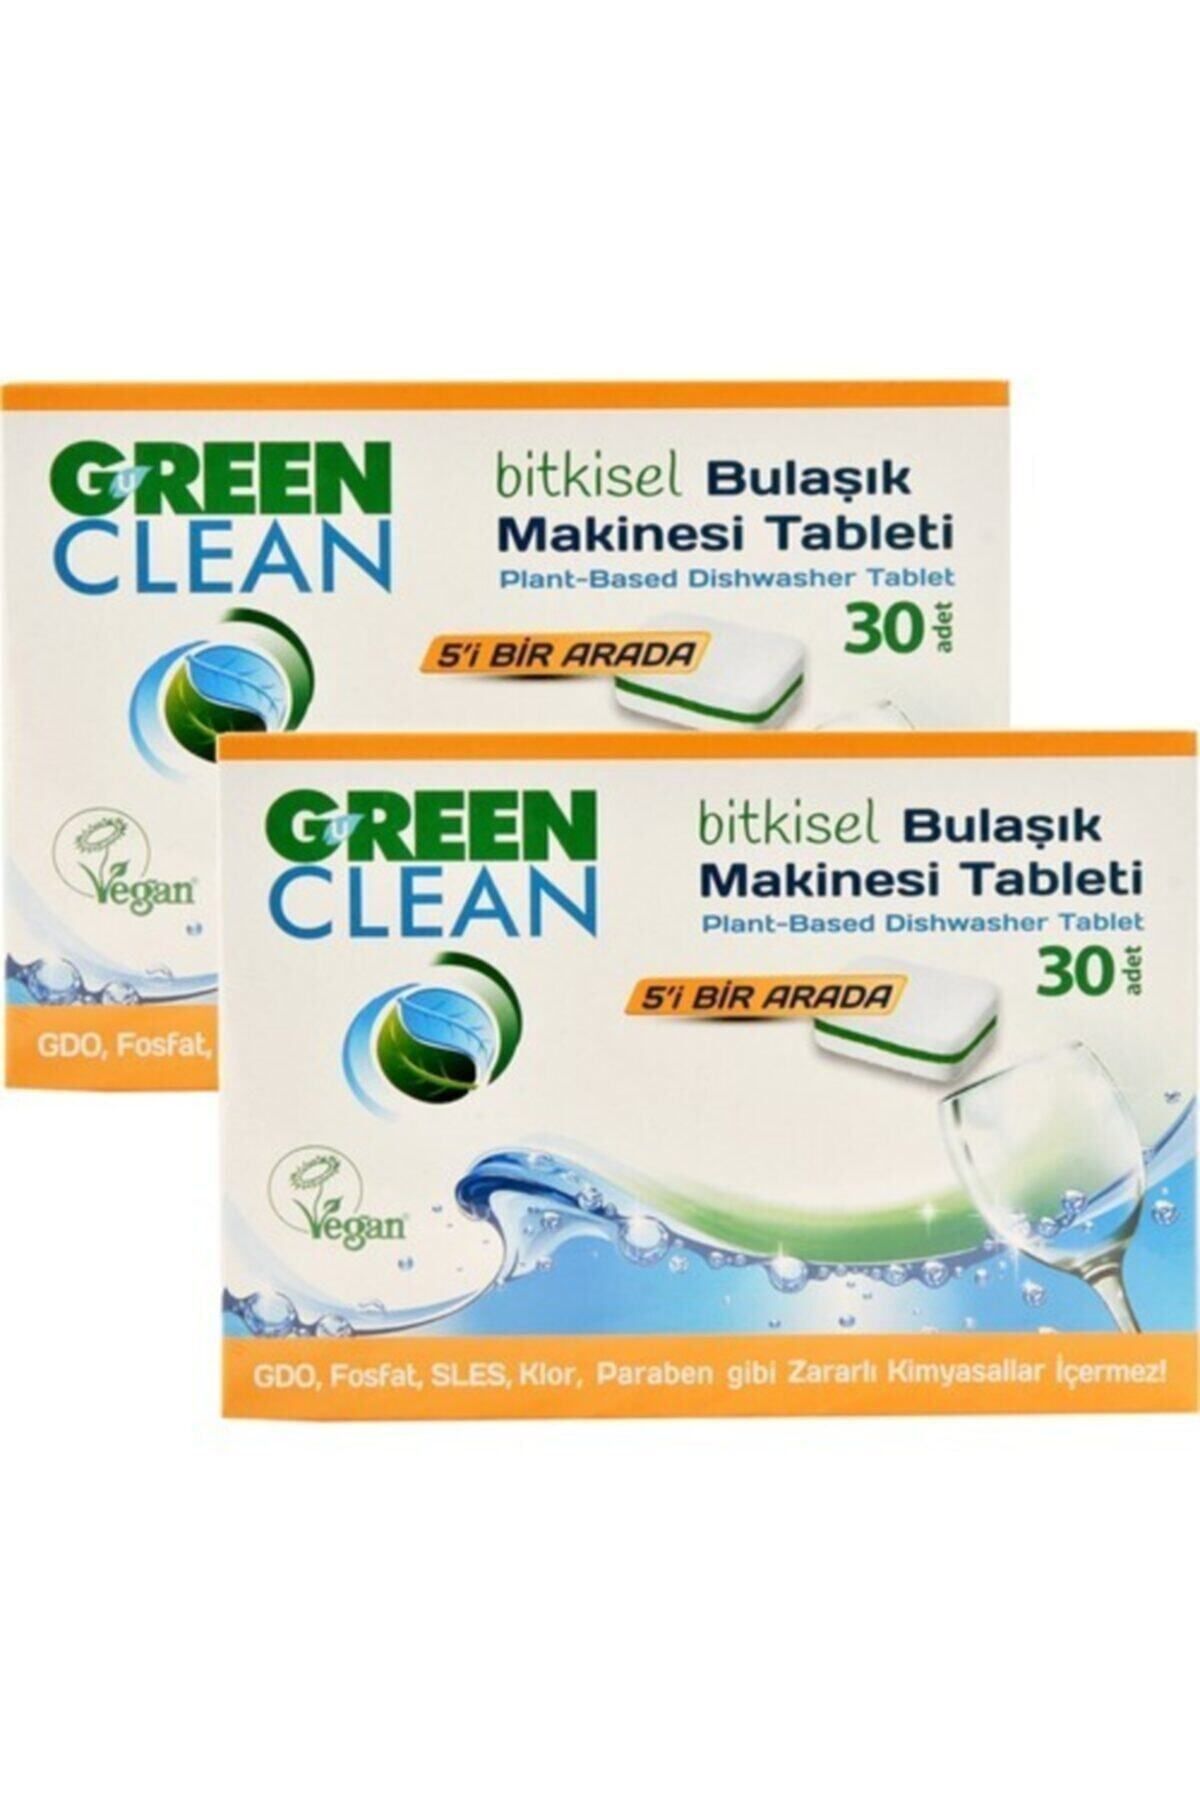 Green Clean Bitkisel Bulaşık Makinesi Tableti 30 Adet X 2 Adet